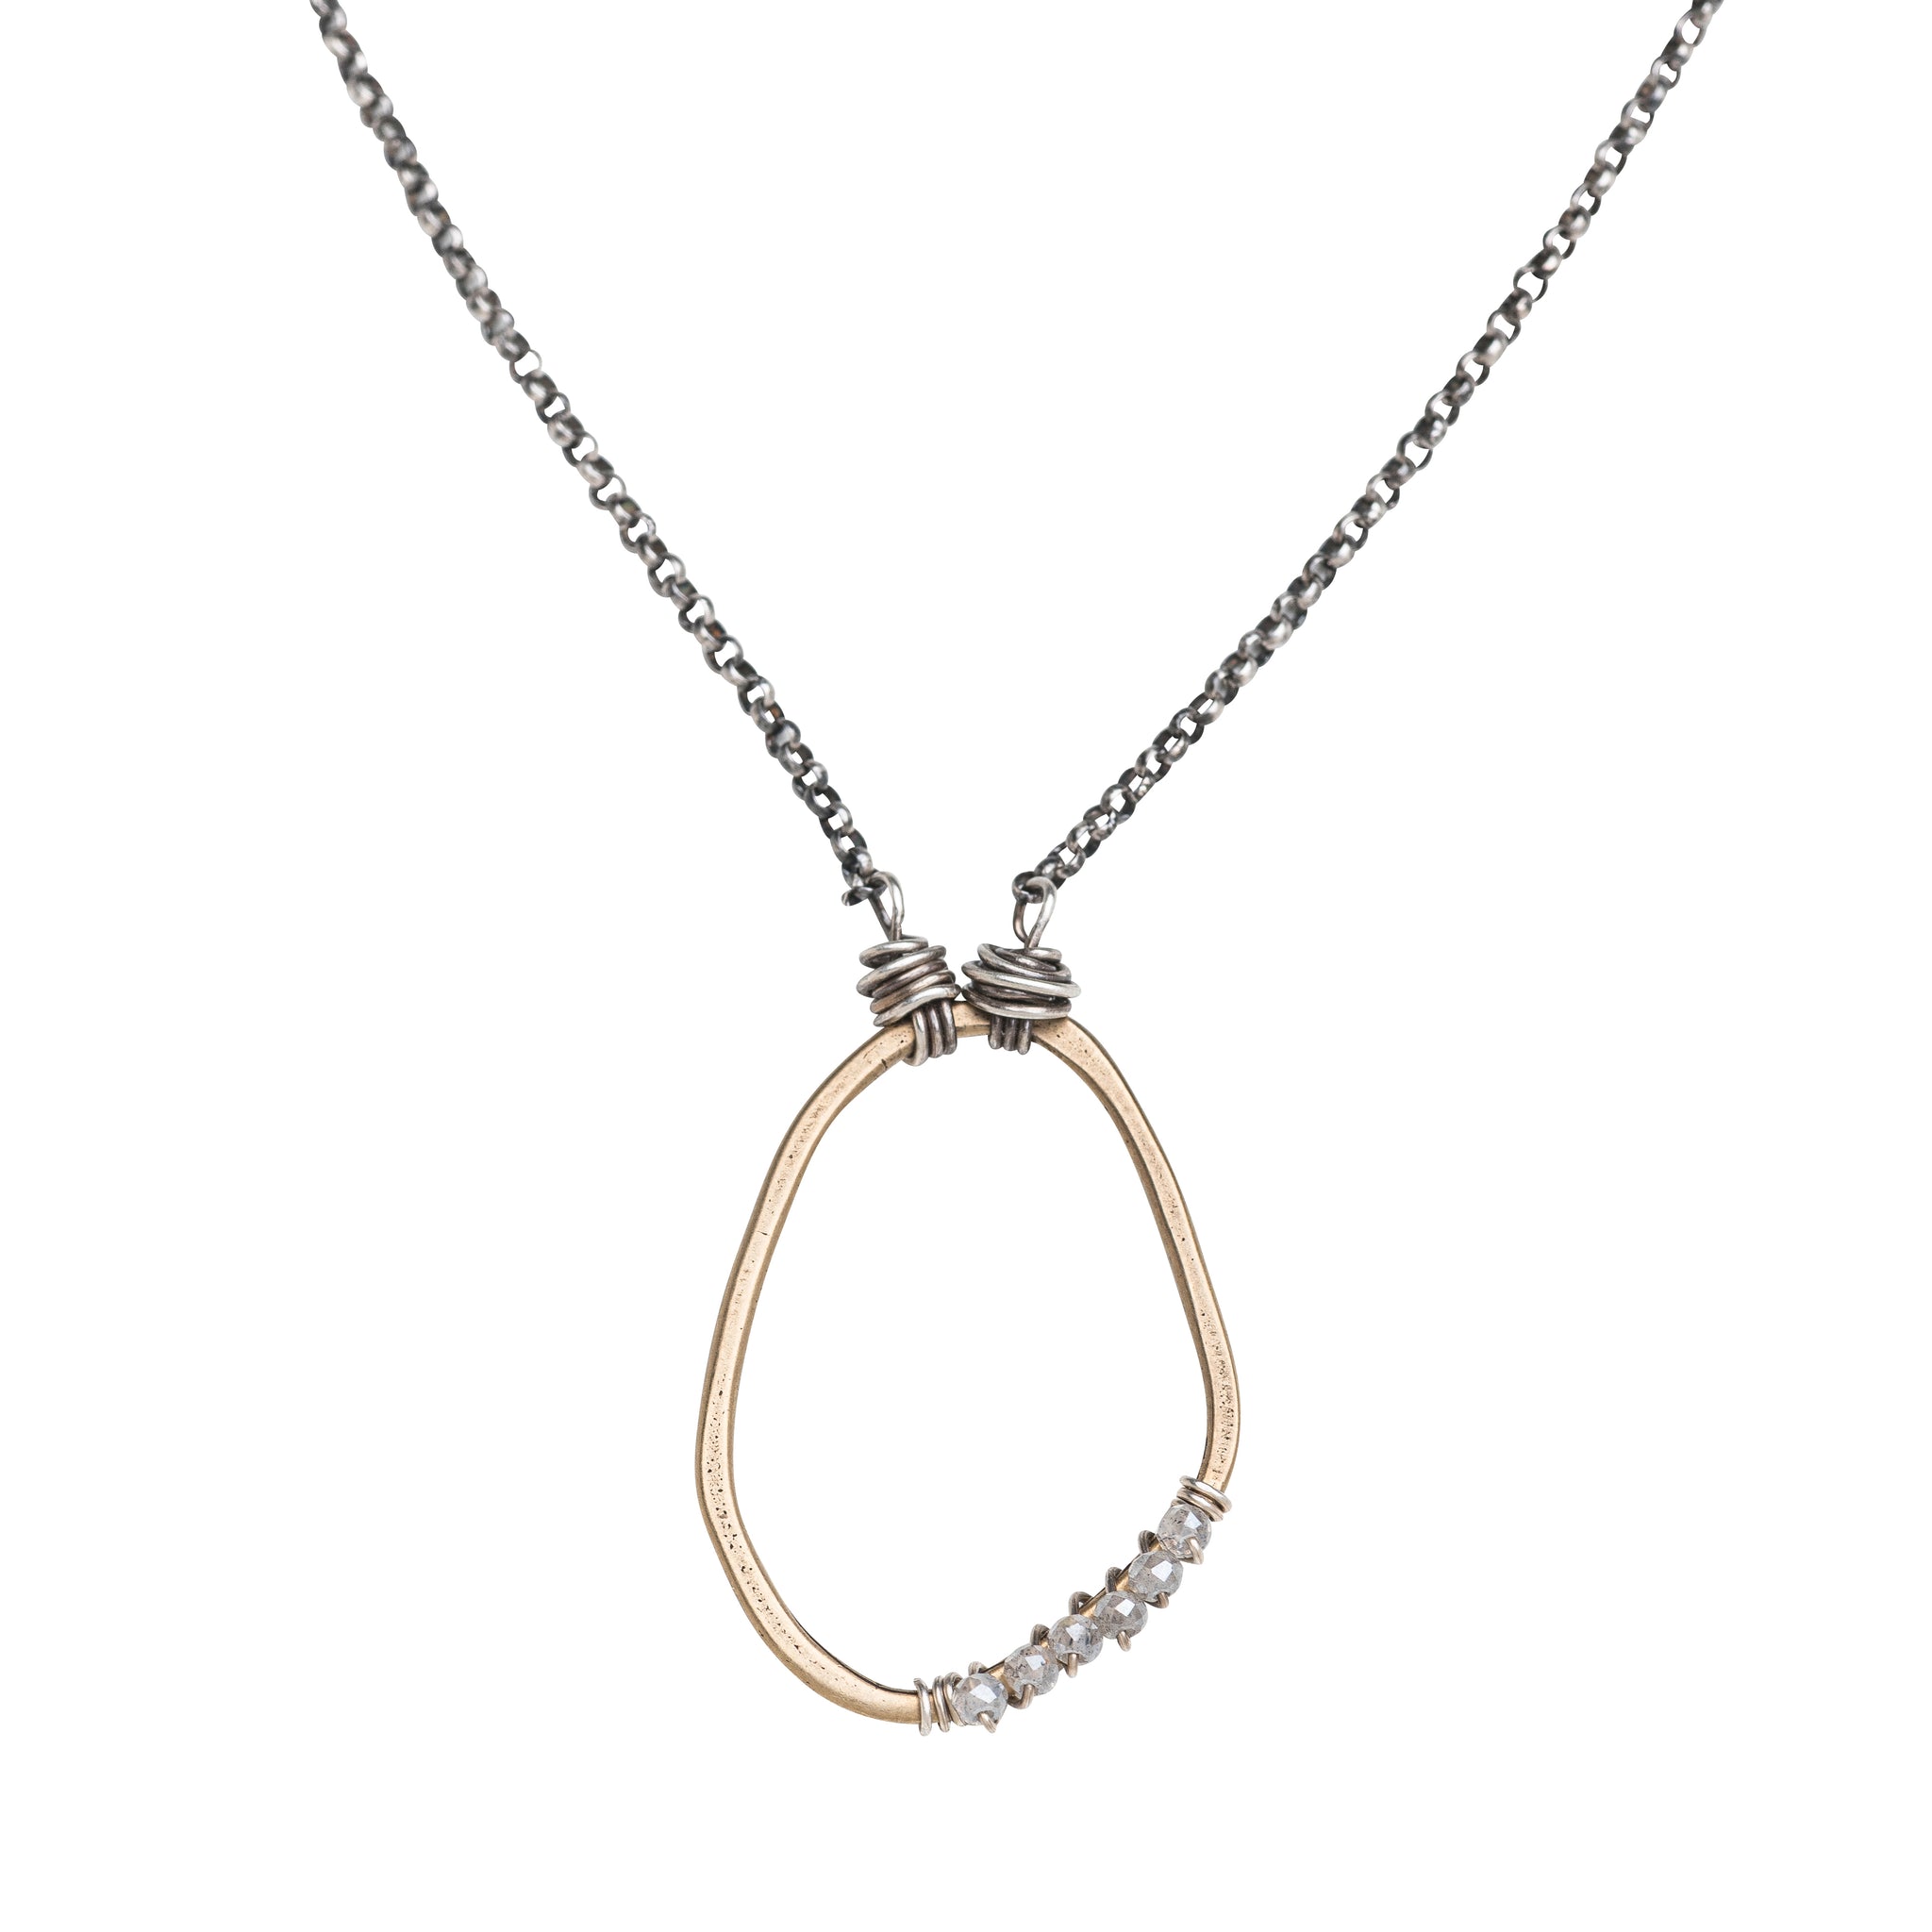 Freeform Wrap Necklace with Labradorite by Original Hardware